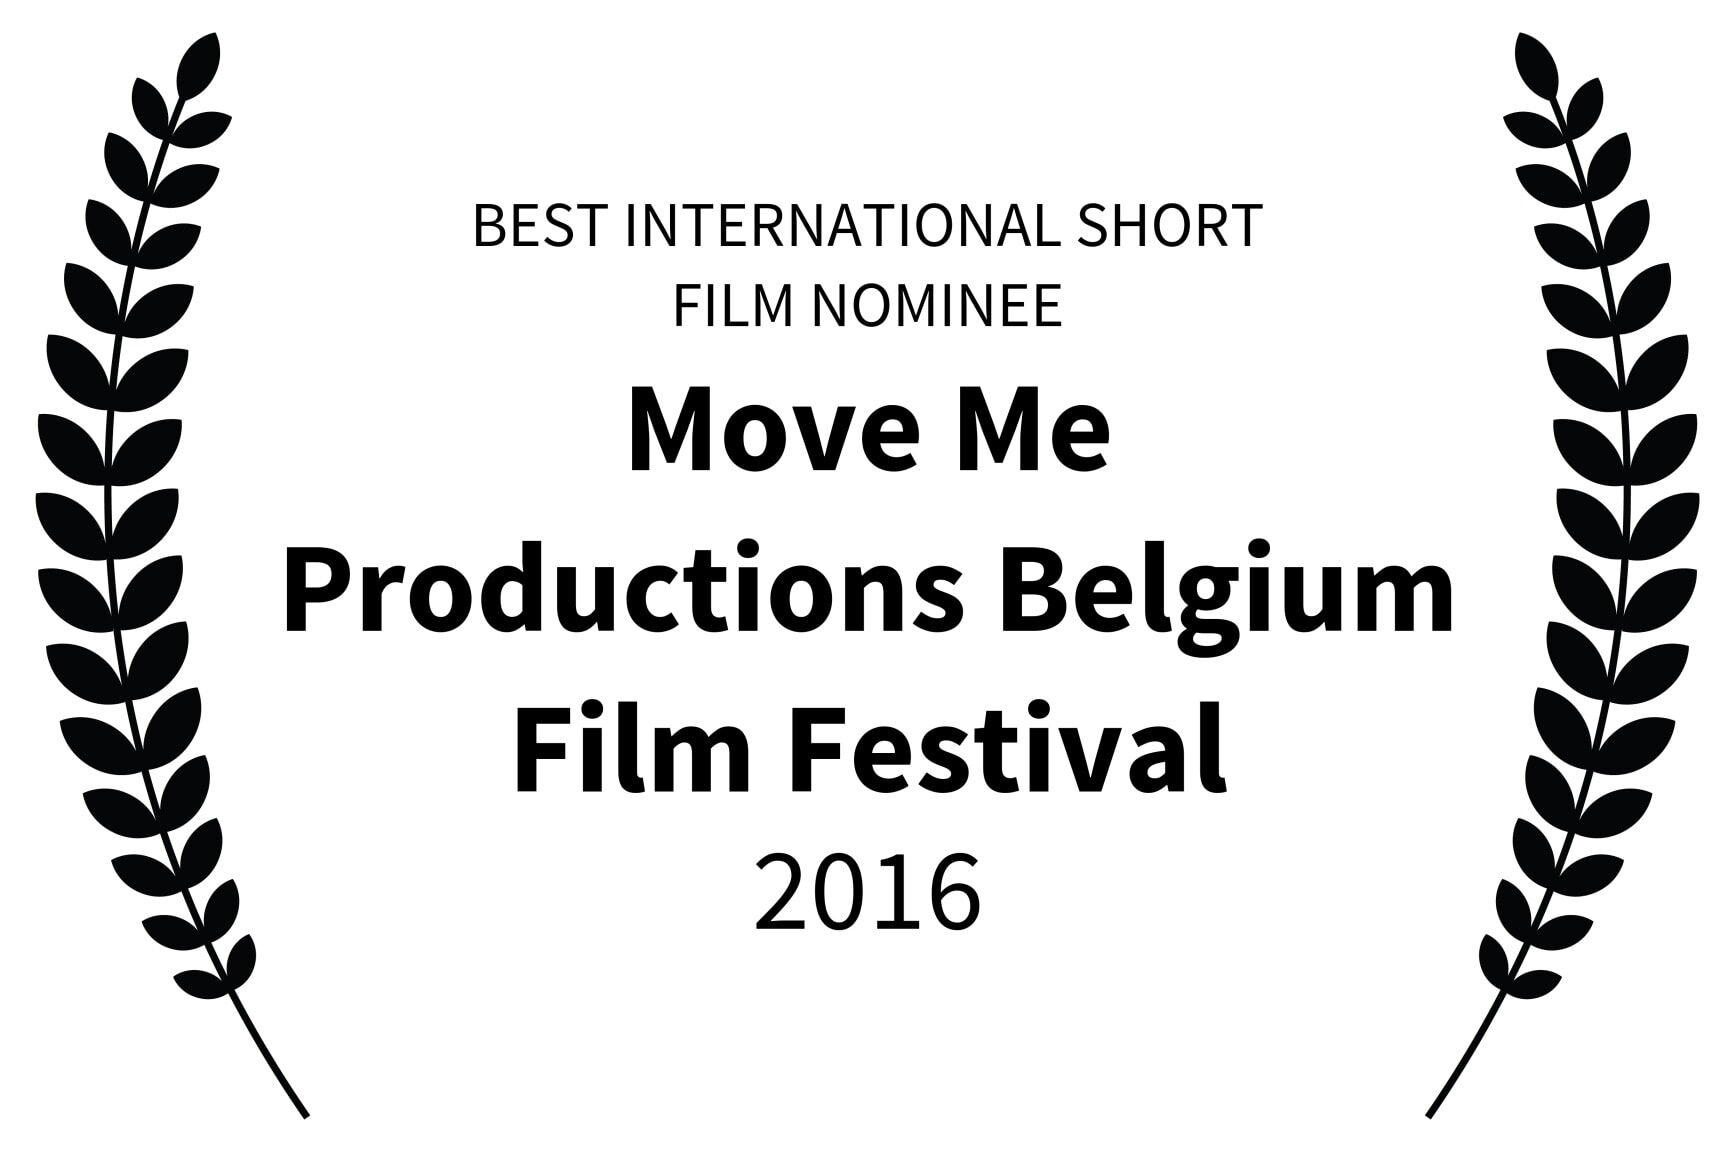 TBEST INTERNATIONAL SHORT FILM NOMINEE - Move Me Productions Belgium Film Festival - 2016